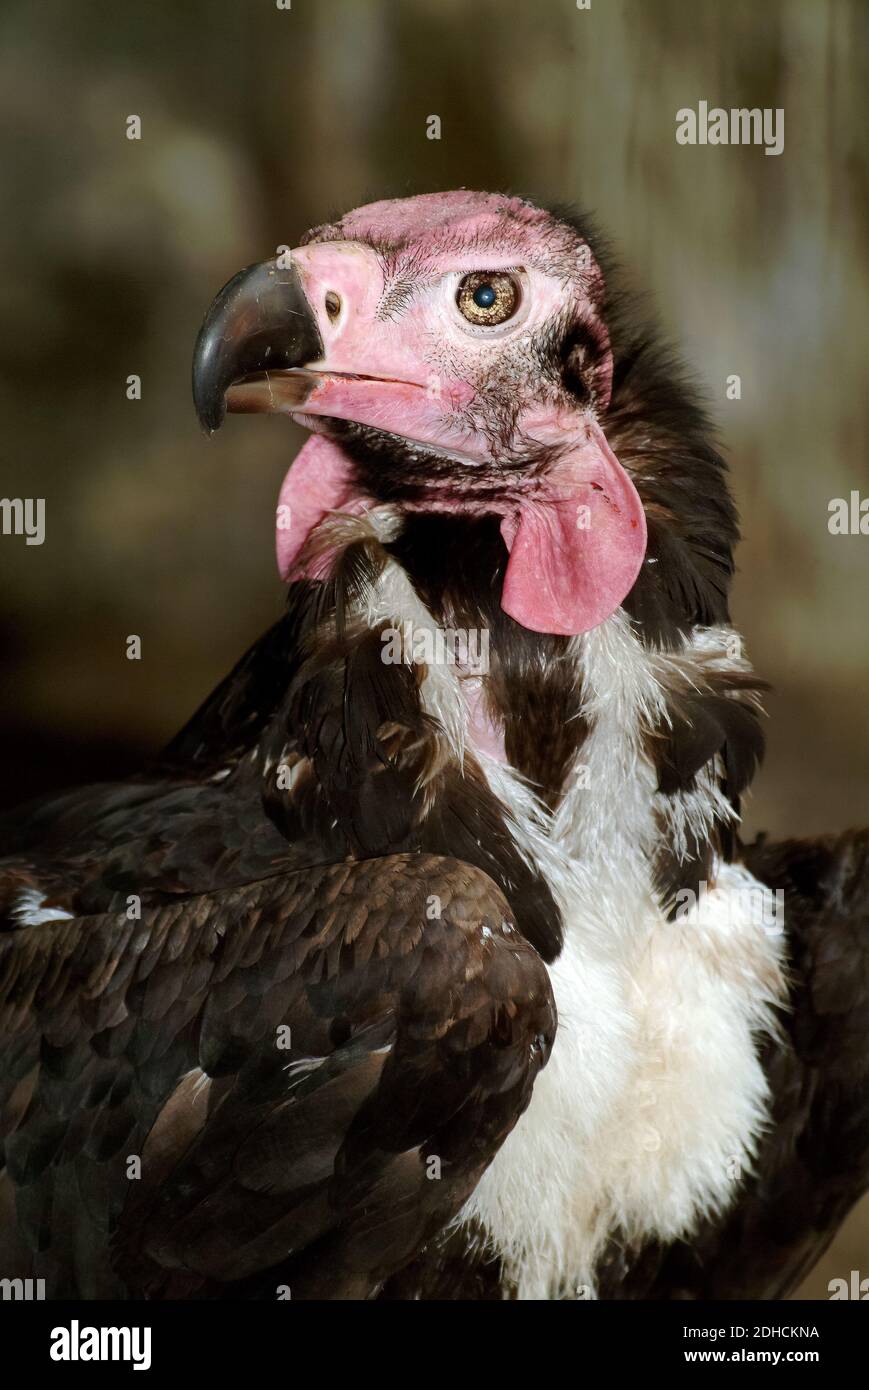 Red-headed vulture, Asian king vulture, Indian black vulture, Kahlkopfgeier, Sarcogyps calvus, pirosfejű keselyű, Critically Endangered Stock Photo